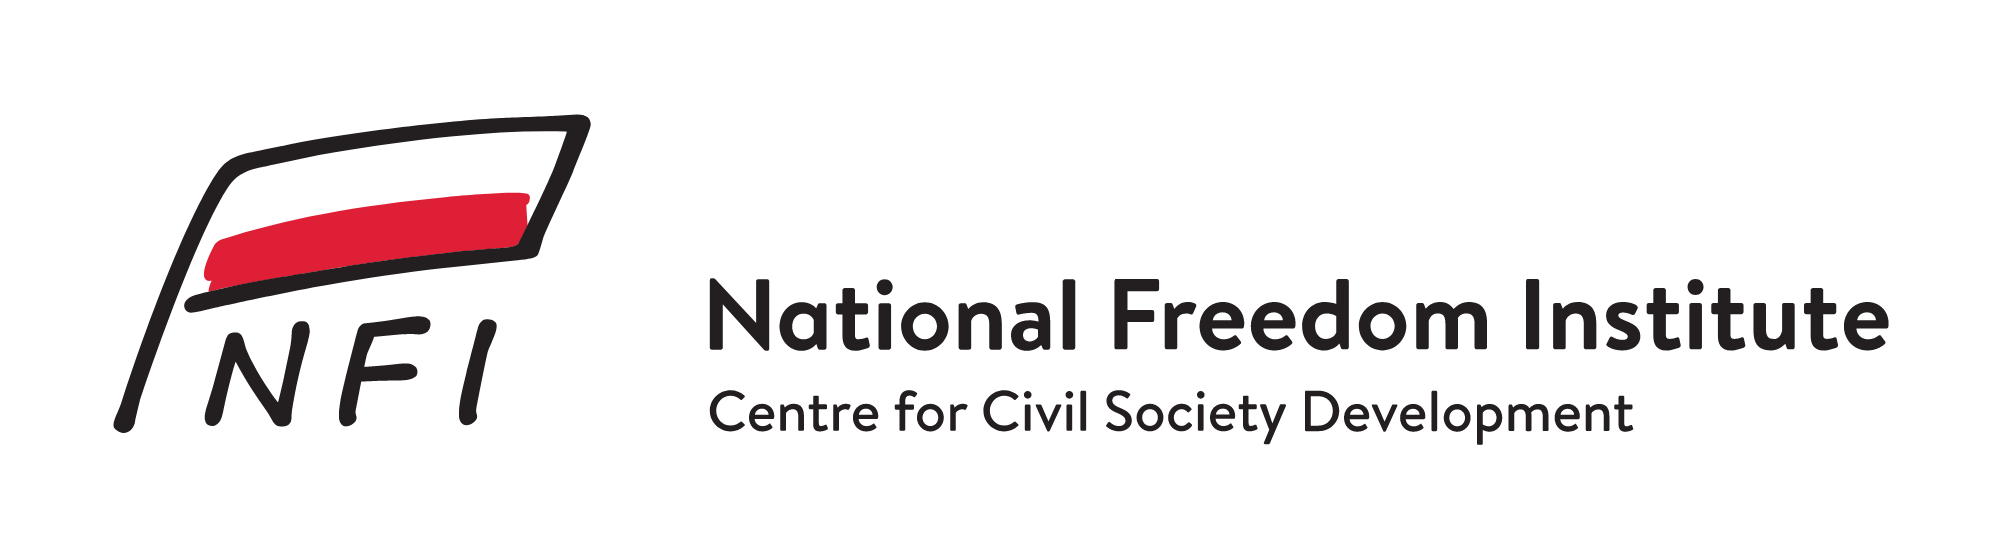 National Freedom Institute – Centre for Civil Society Development 